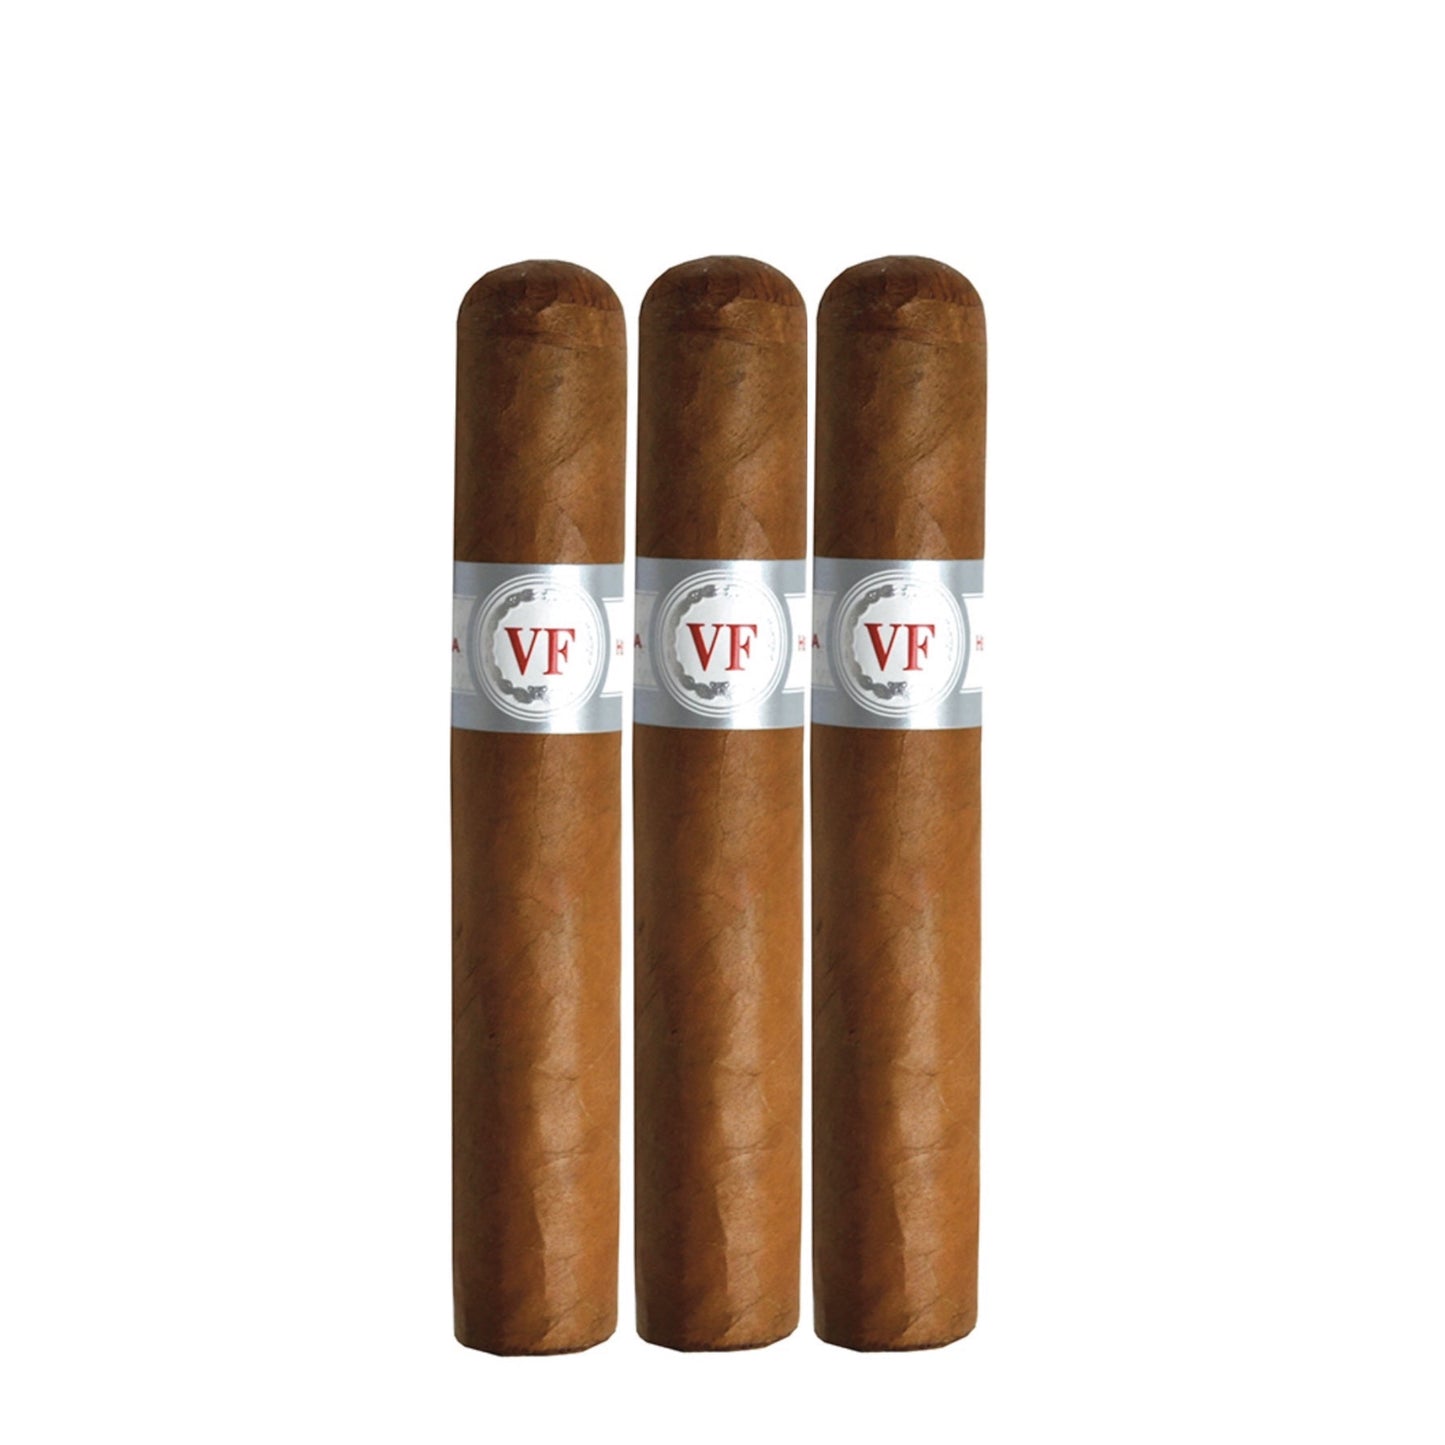 VegaFina Robusto Tubed - Cigars to share